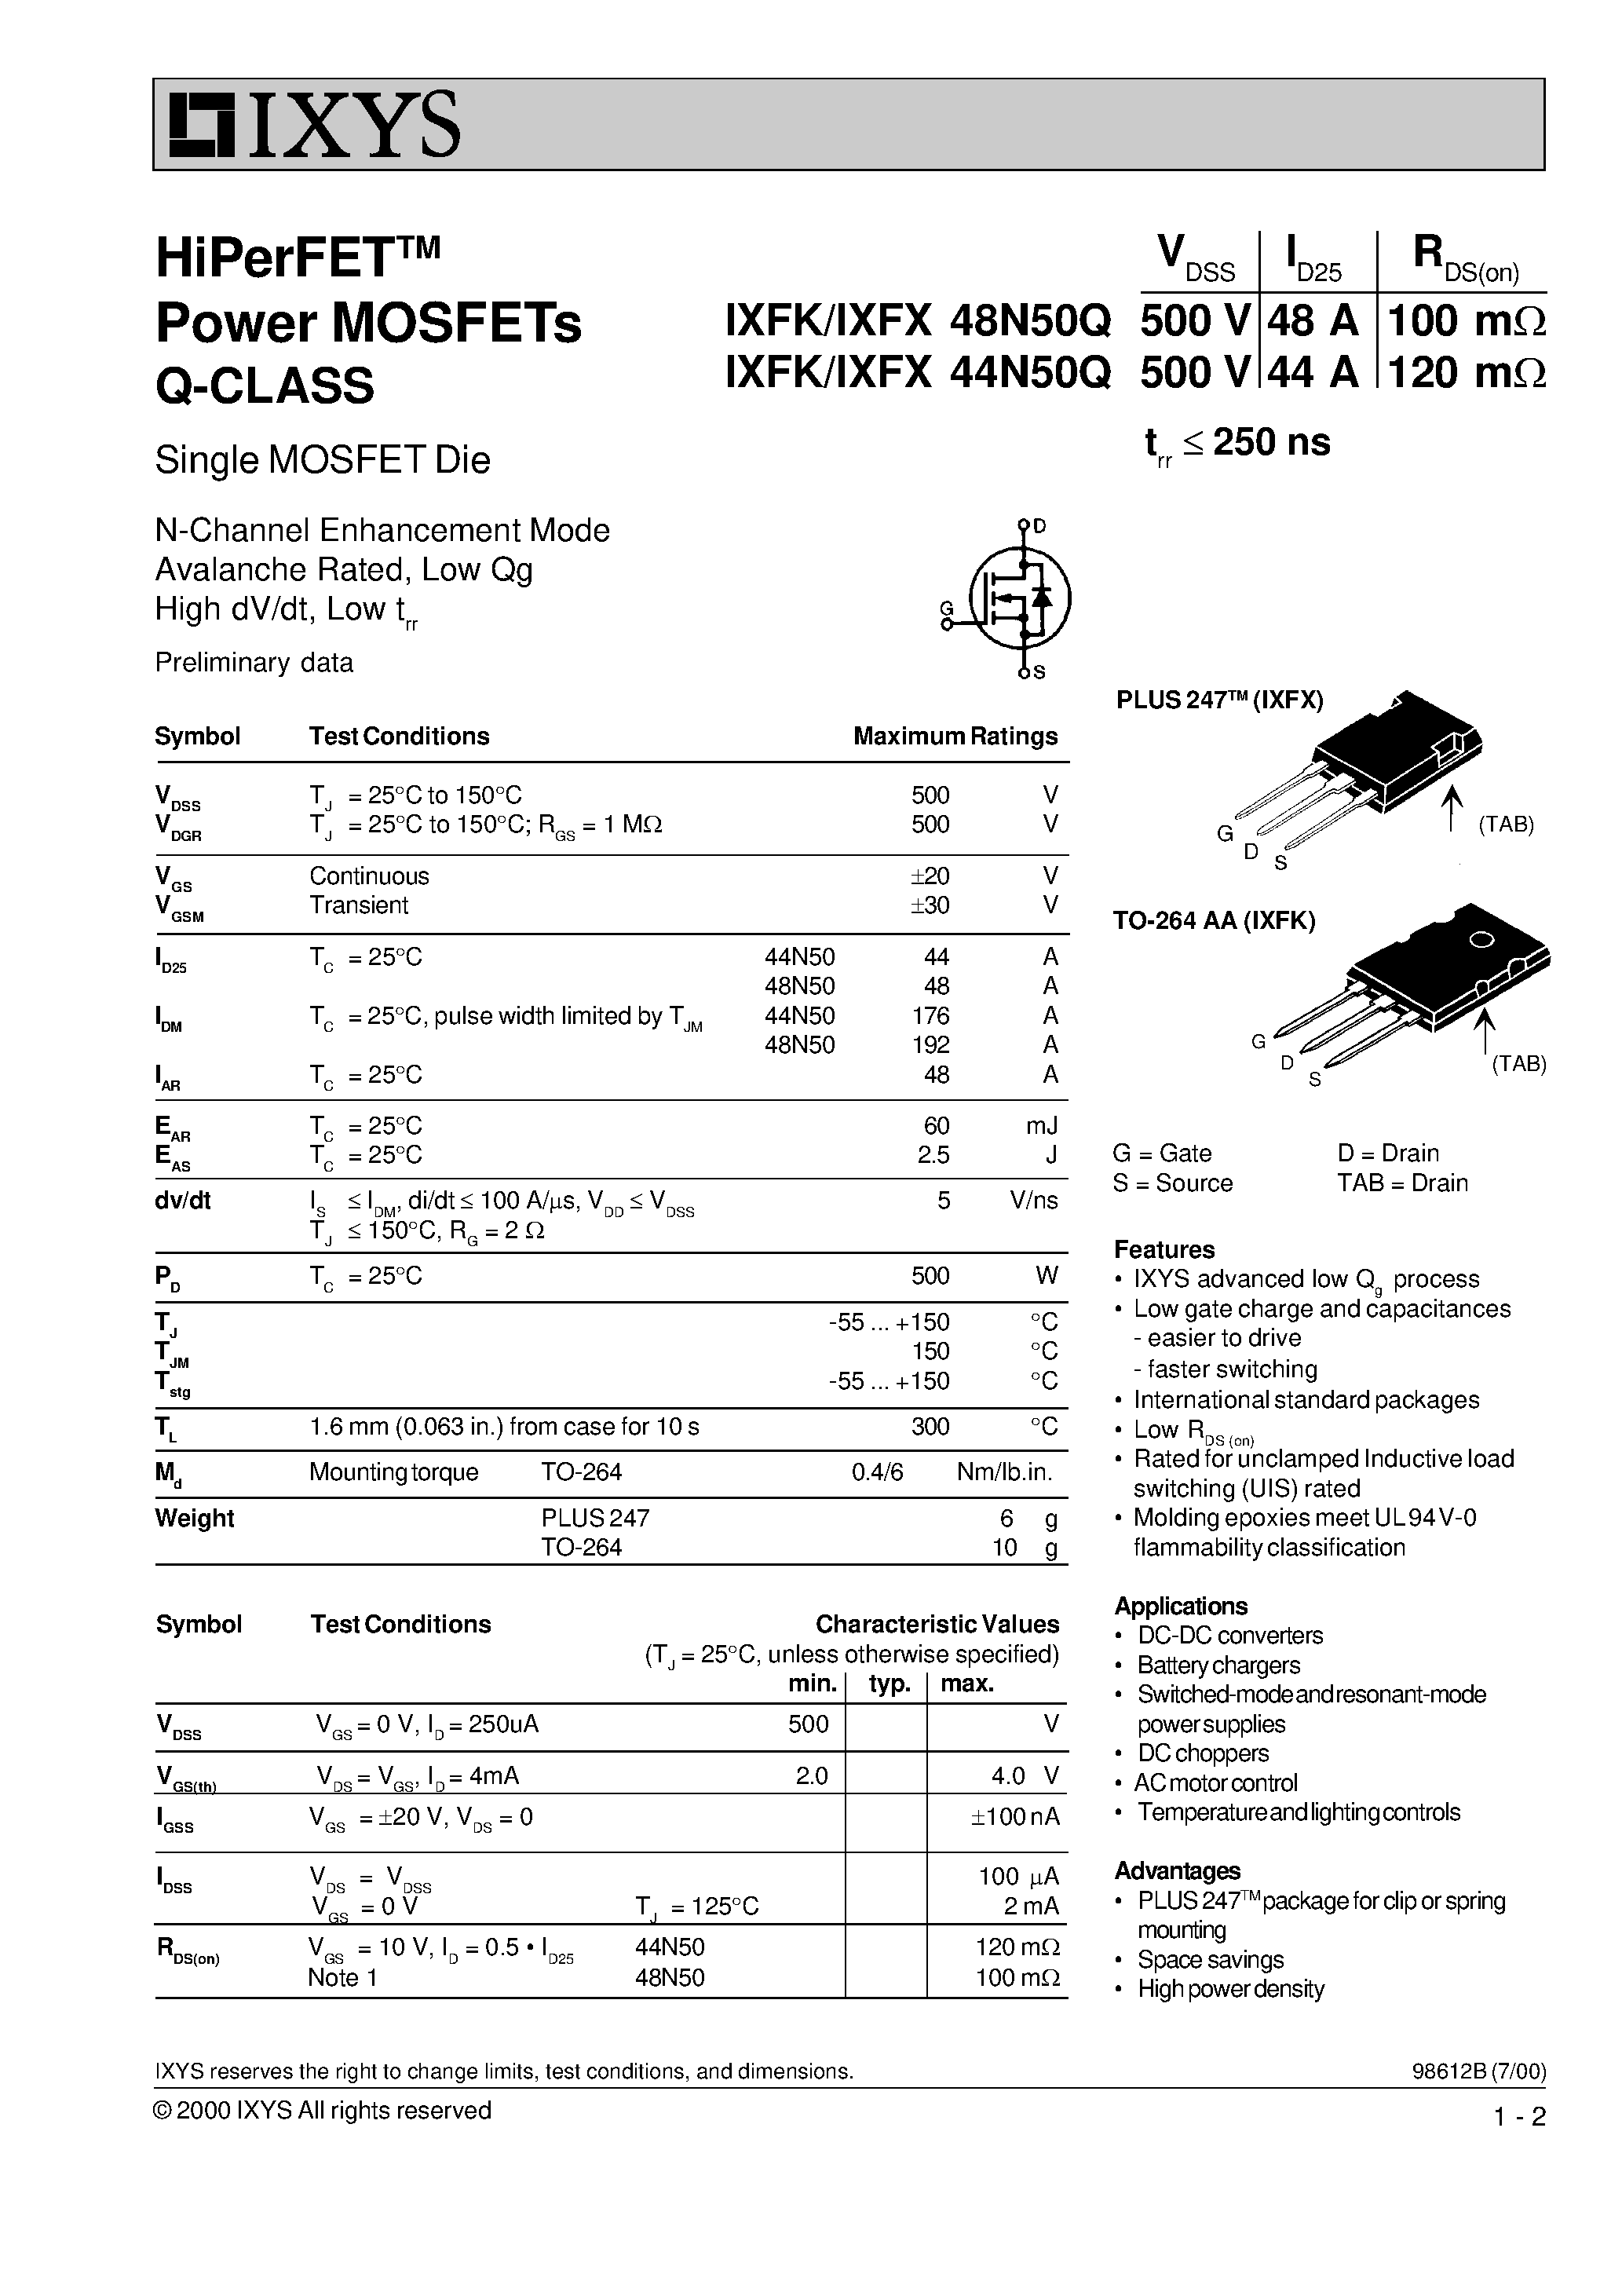 Datasheet IXFX44N50Q - HiPer FET Power MOSFETs Q-CLASS page 1